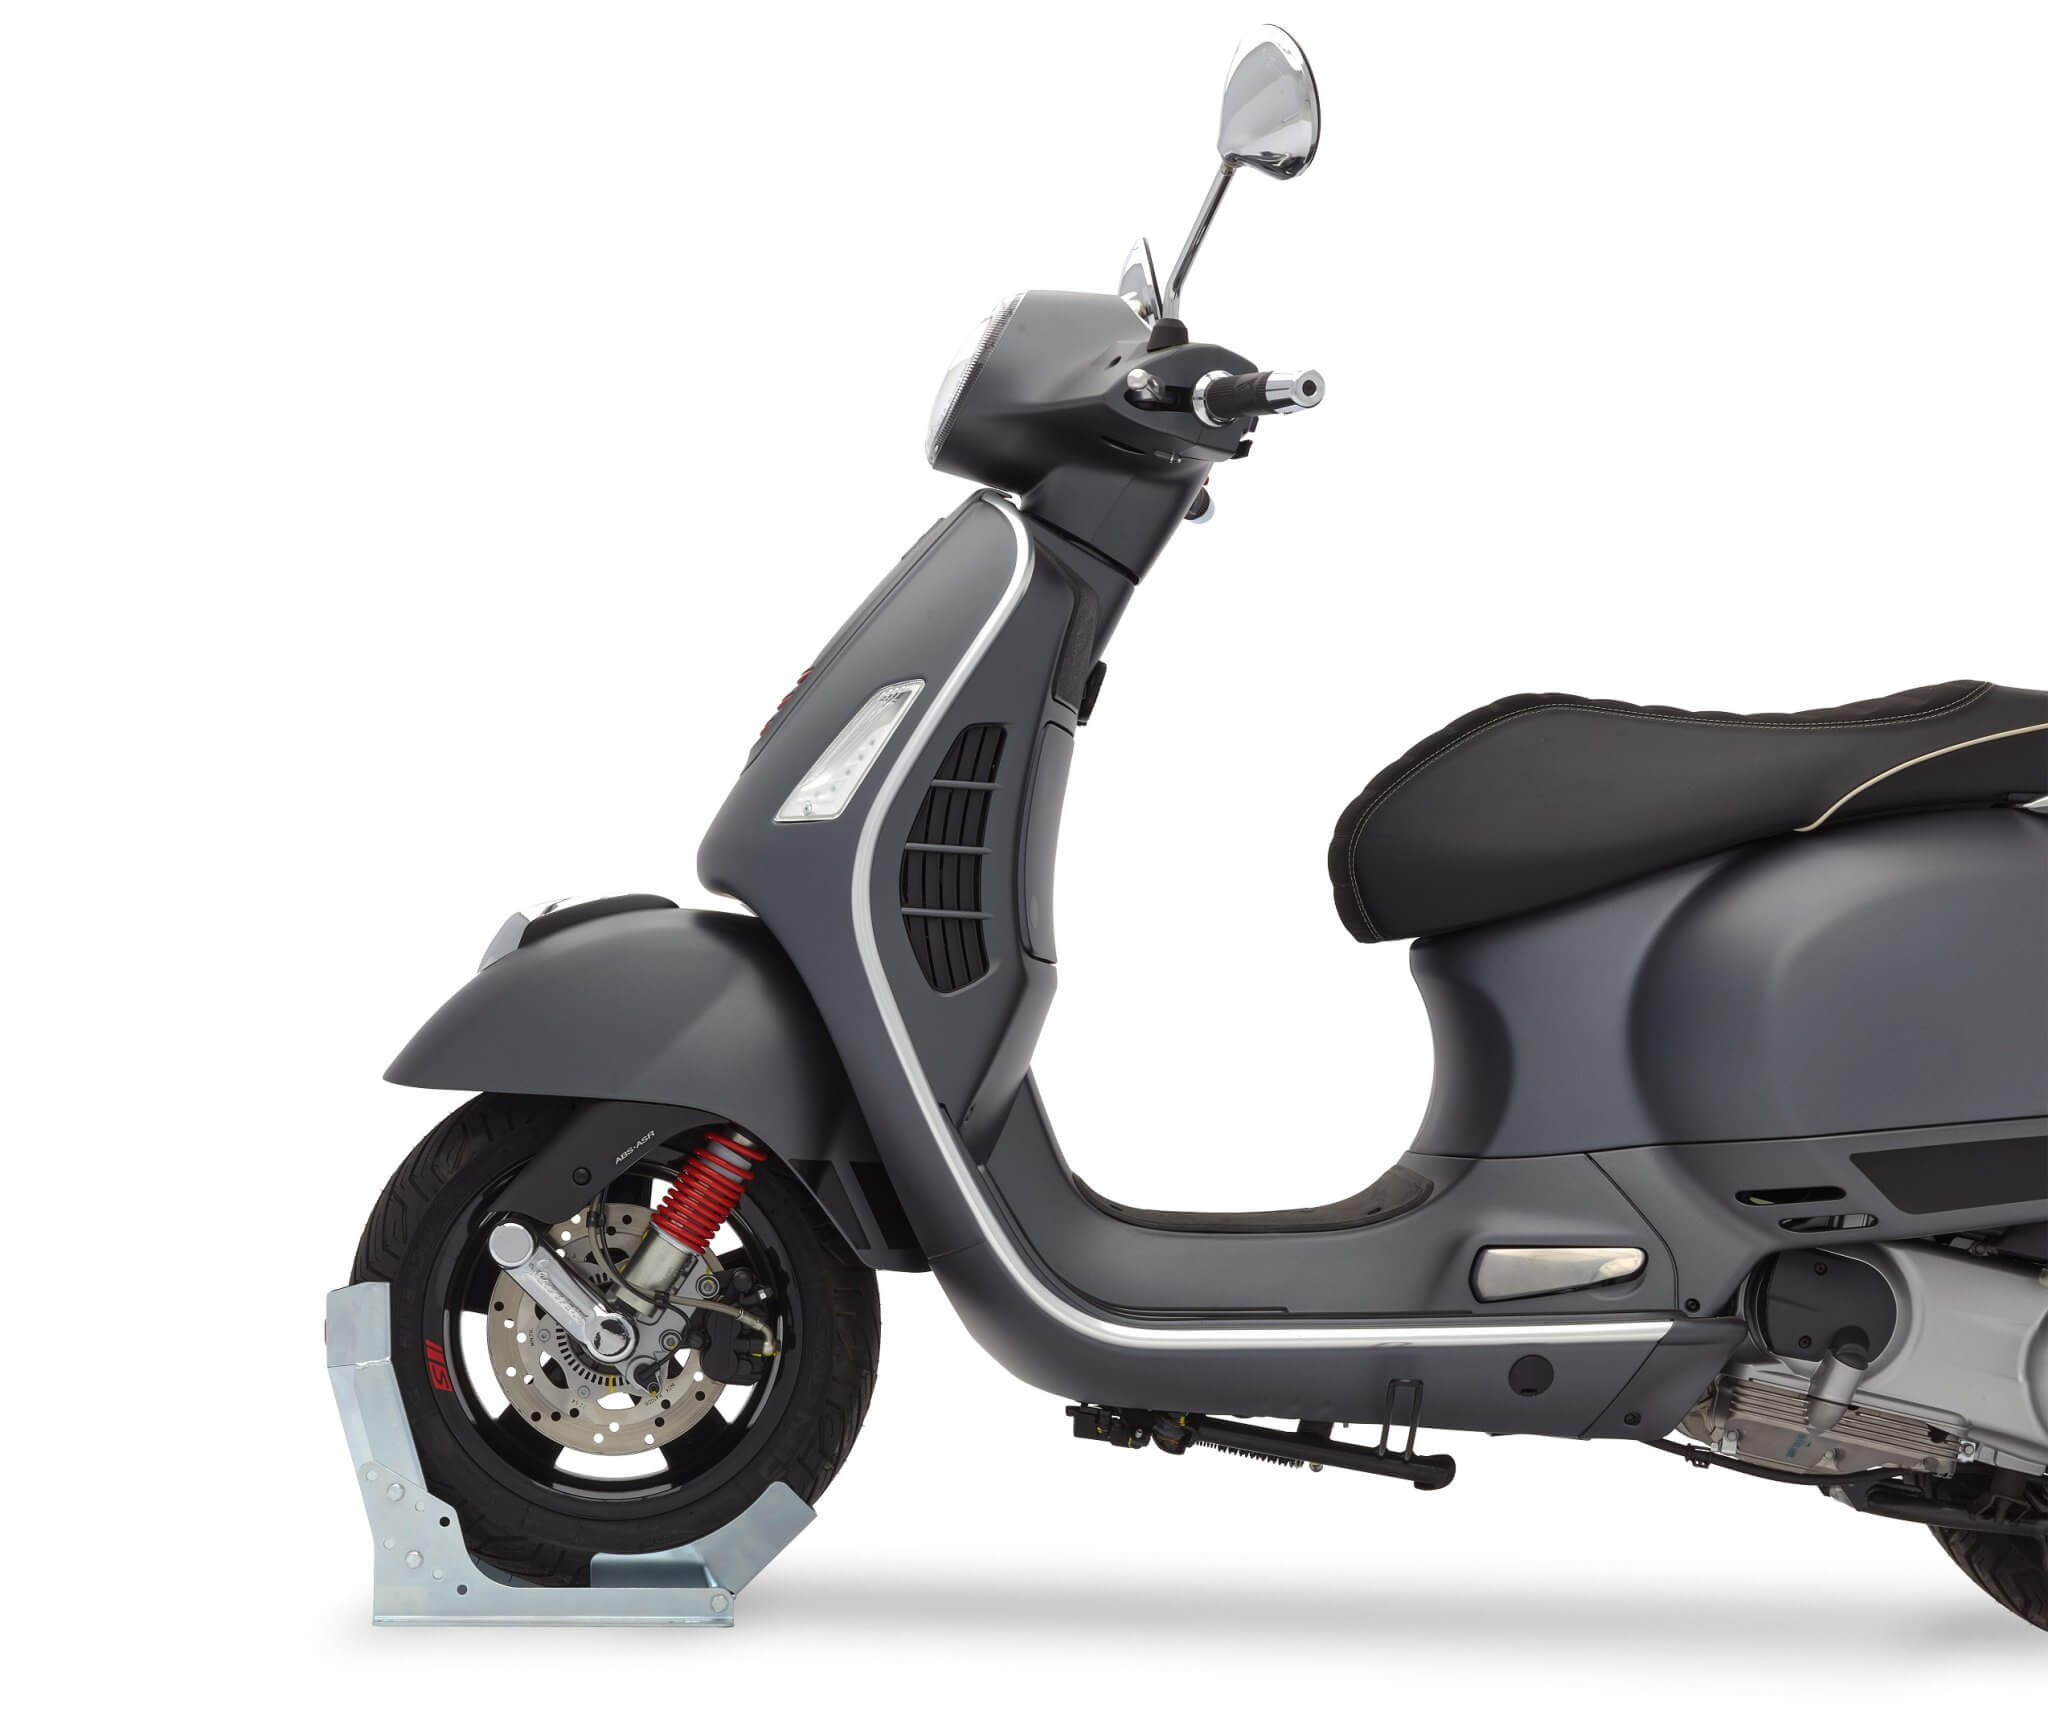 Soporte Rueda Acebikes Steadystand Fixed Moto 305002 Mantenimiento